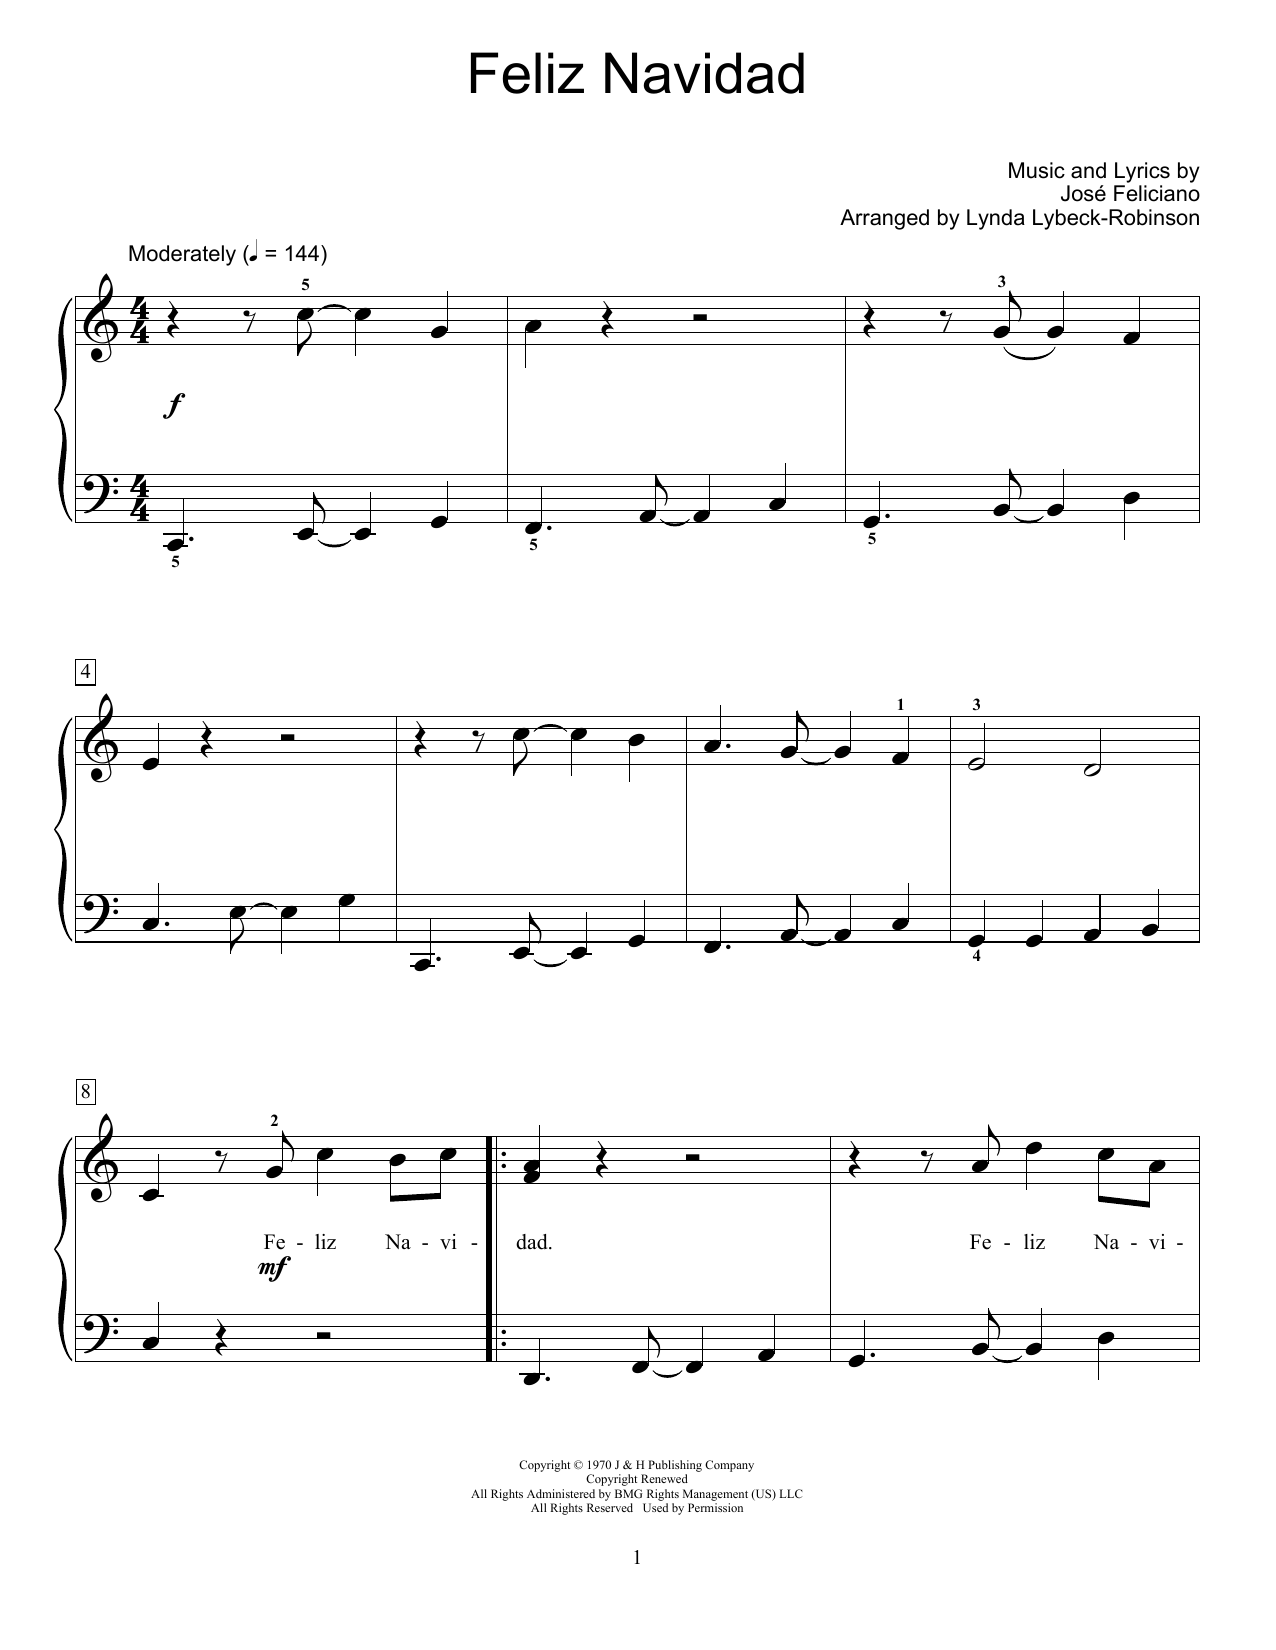 Download Jose Feliciano Feliz Navidad (arr. Lynda Lybeck-Robinson) Sheet Music and learn how to play Educational Piano PDF digital score in minutes